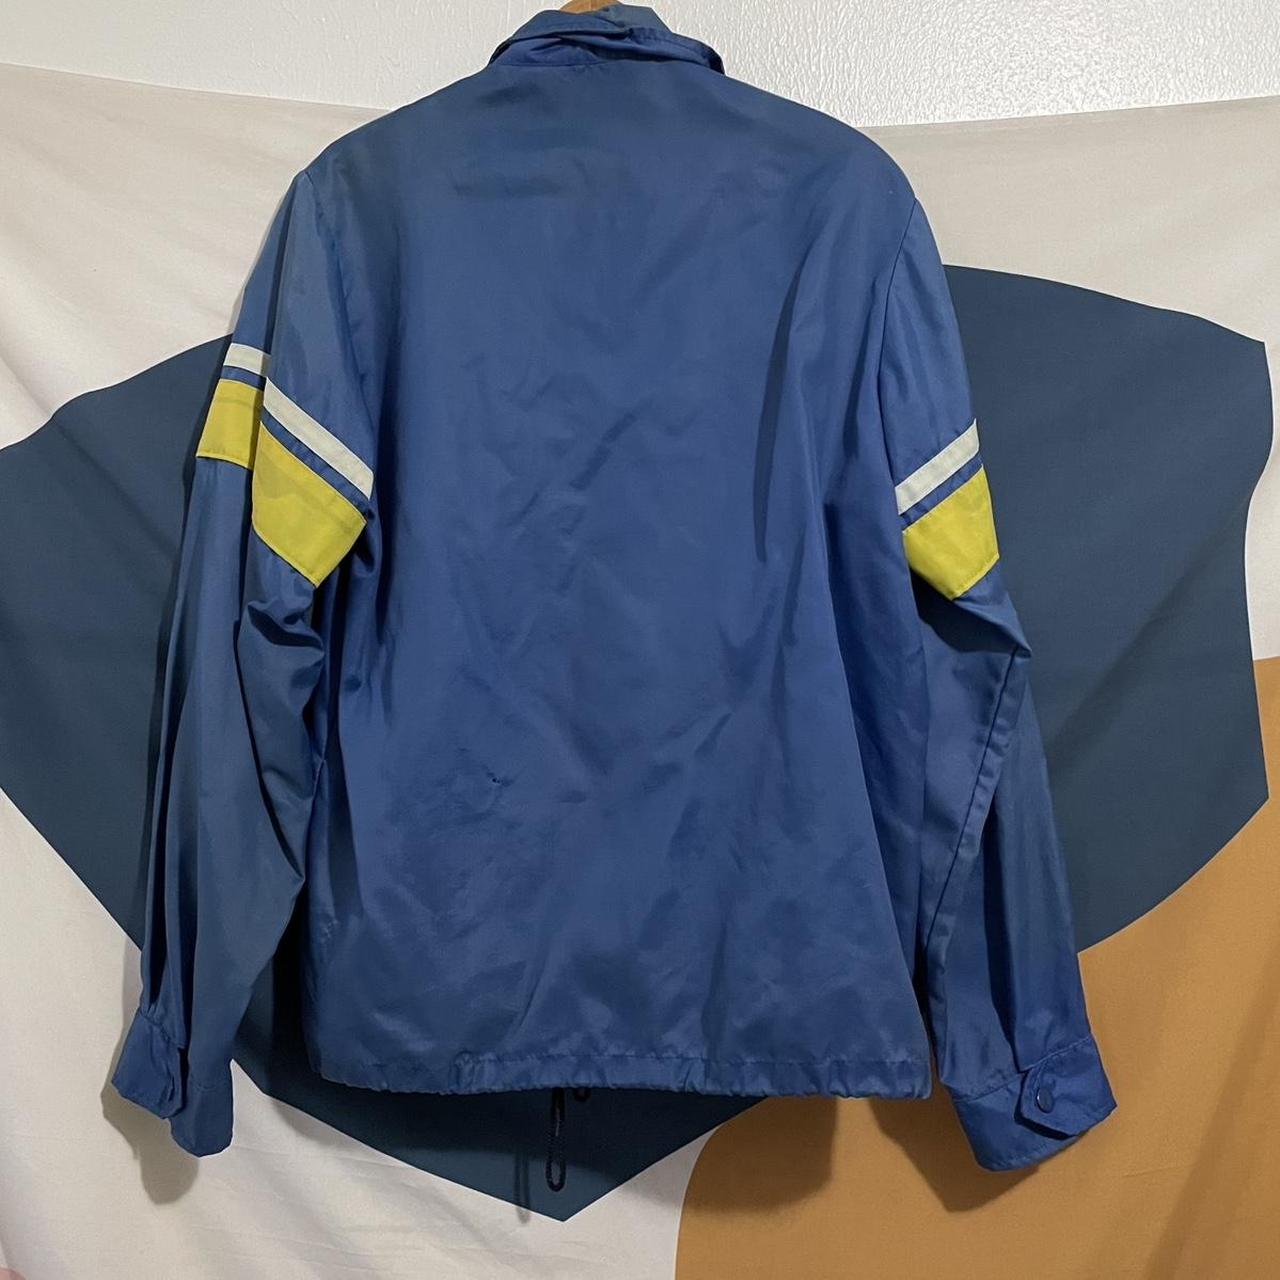 Men's Blue and Yellow Jacket | Depop